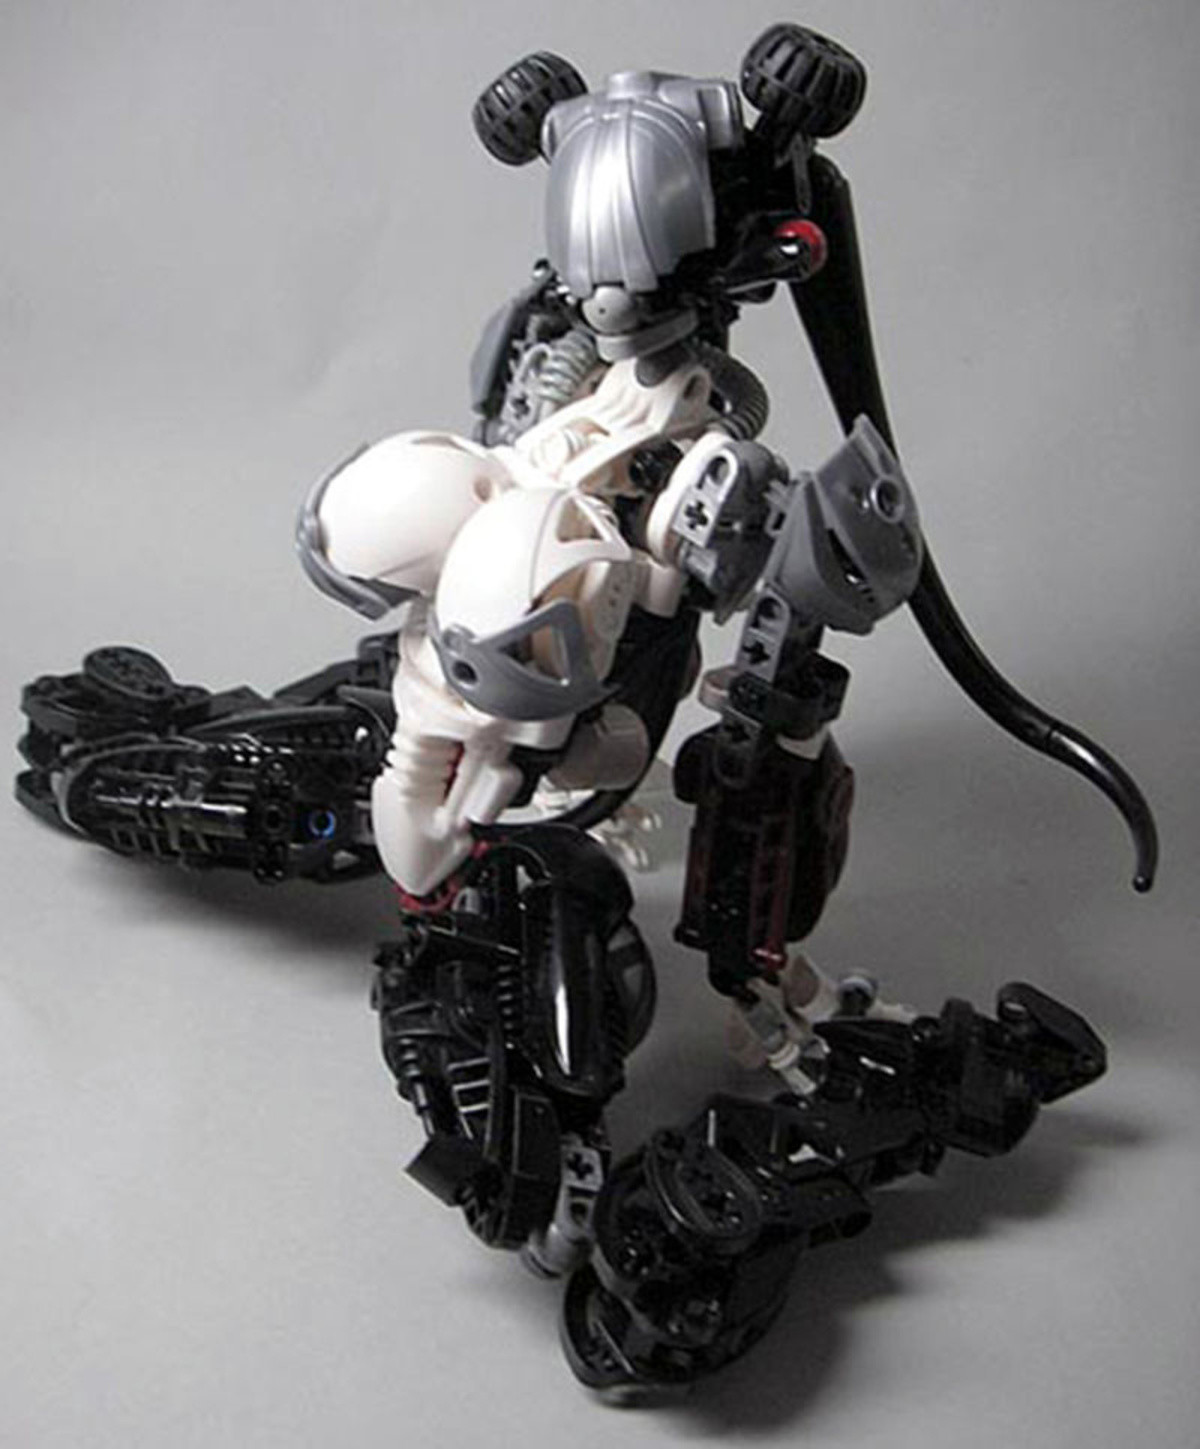 Sexy bionicle